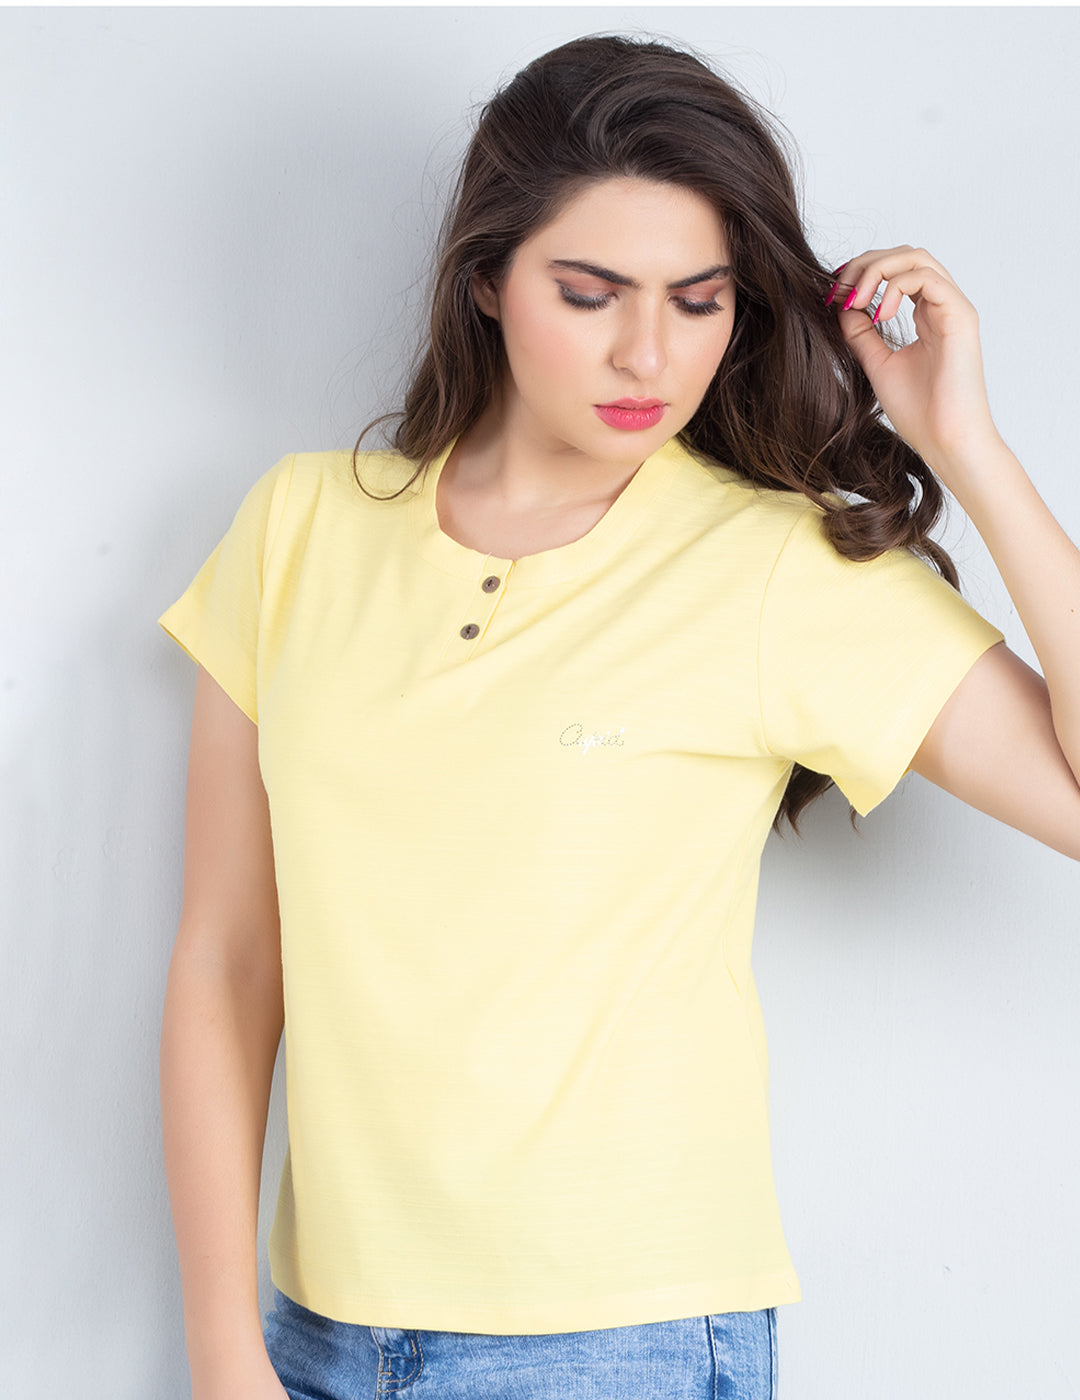 Comfortable Plain Short T-shirts For Women - Lemon At Best Prices